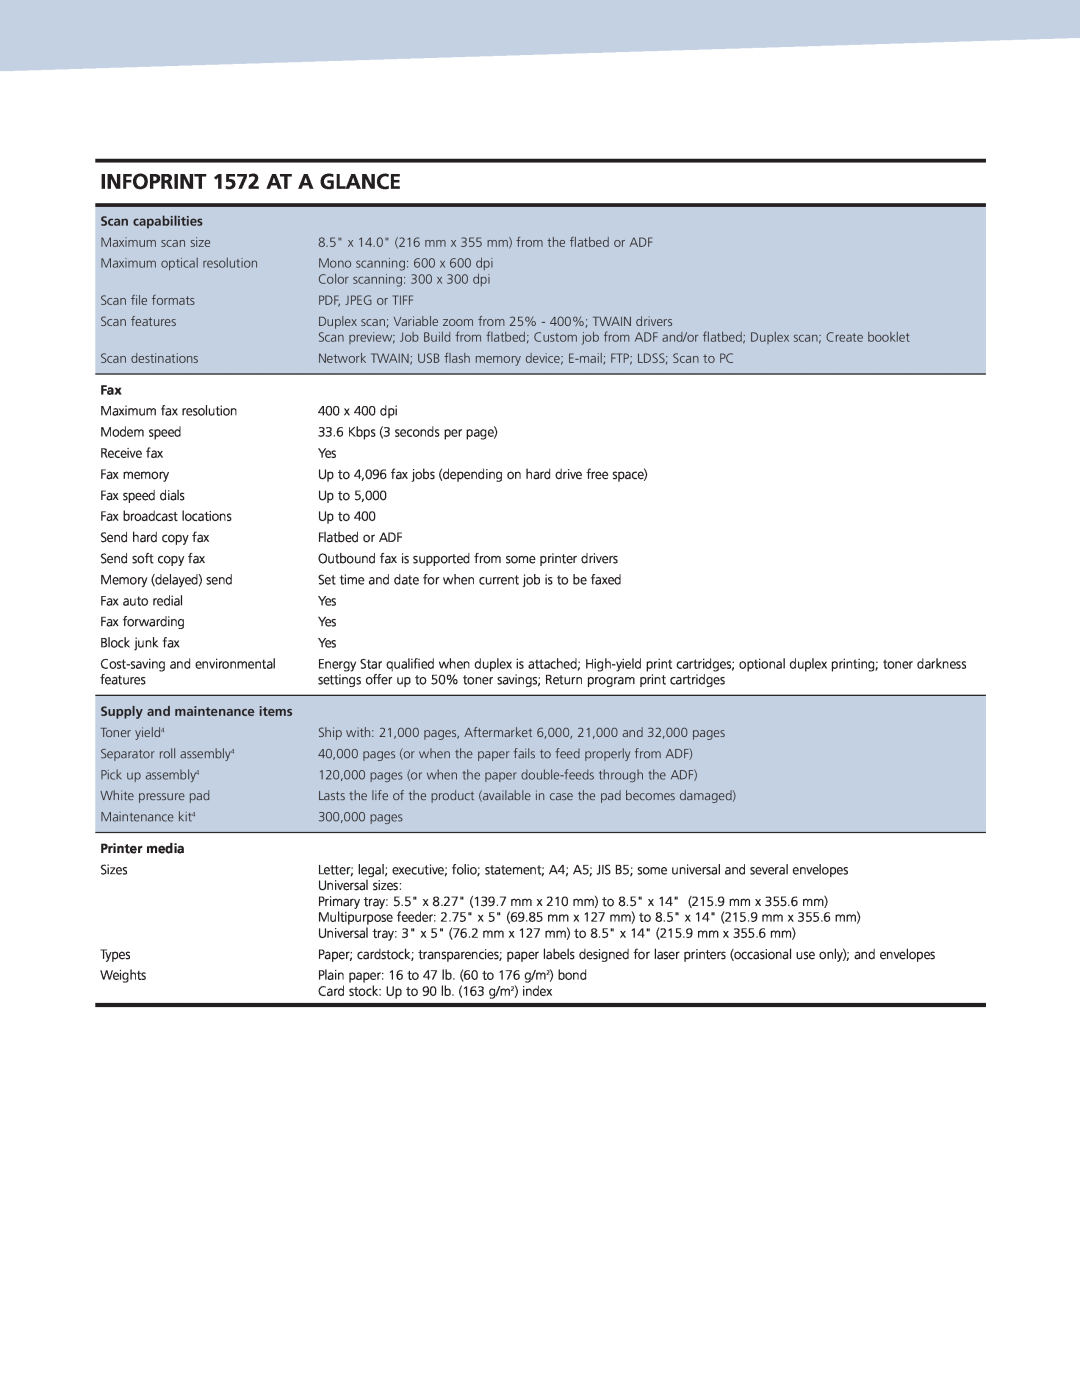 Ricoh 1572 MFP manual INFOPRINT 1572 AT A GLANCE, Scan capabilities, Supply and maintenance items, Printer media 